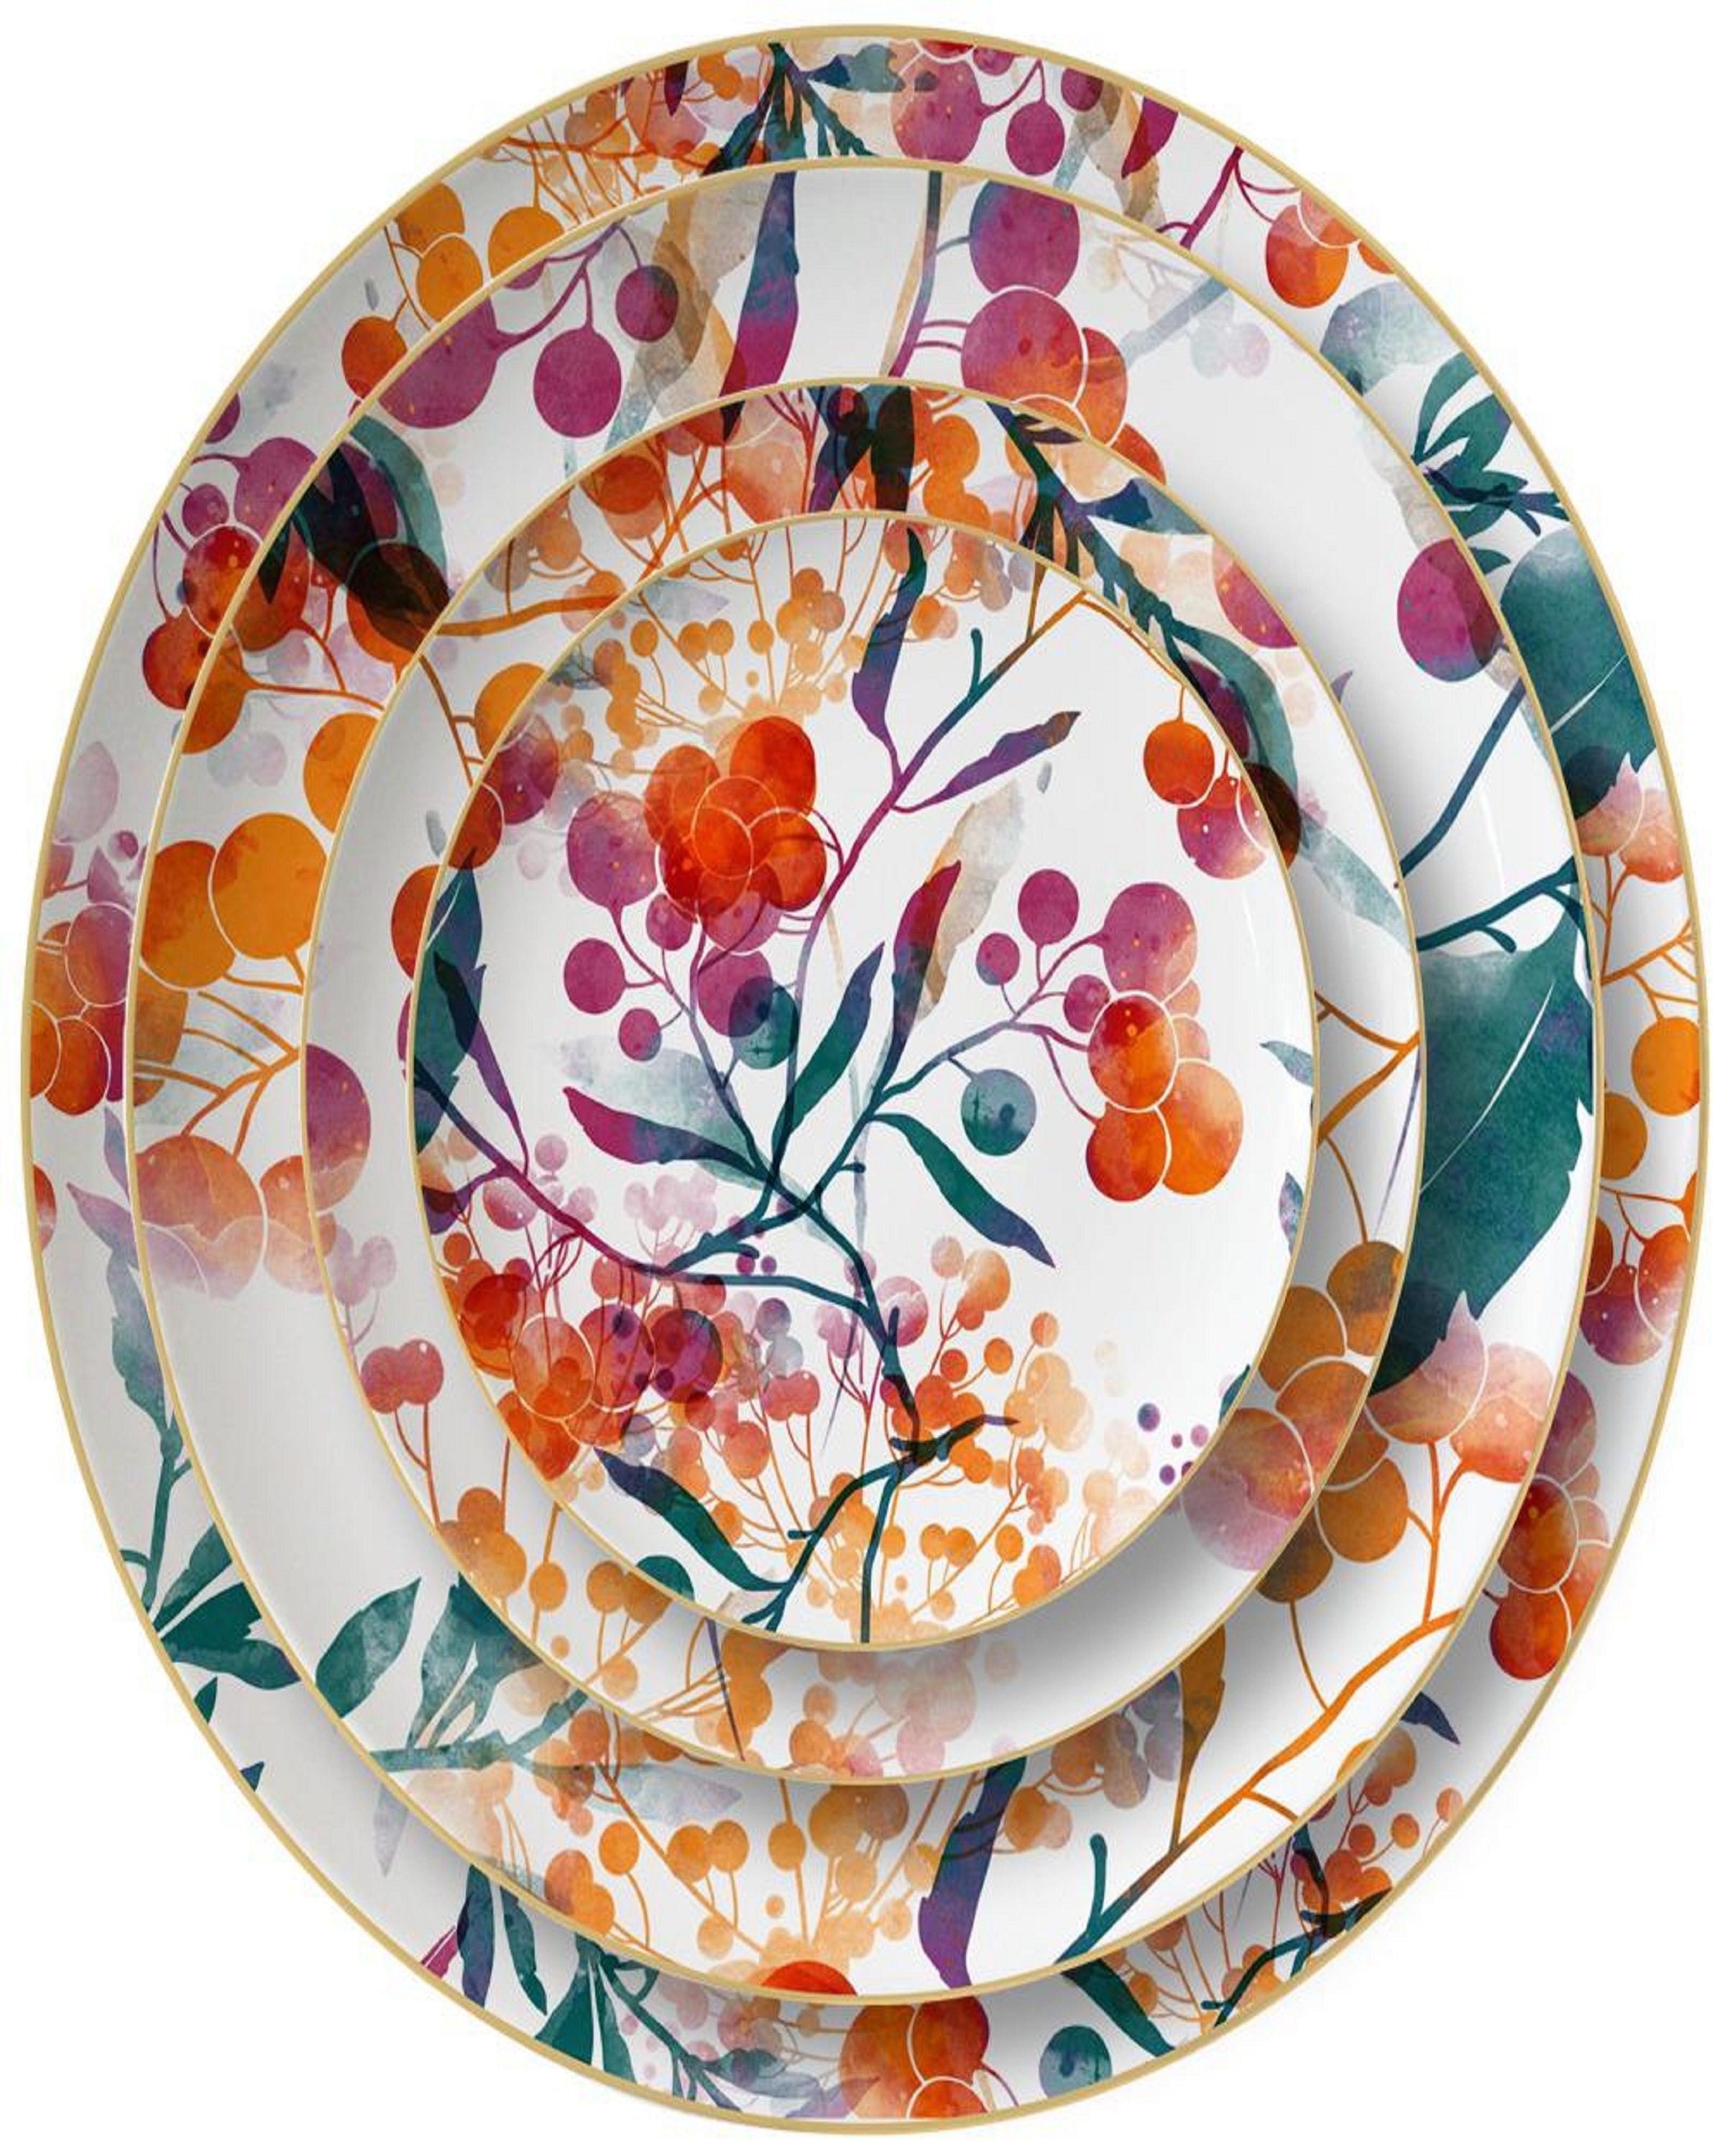 Colorful Ceramic Dinner Plates Online